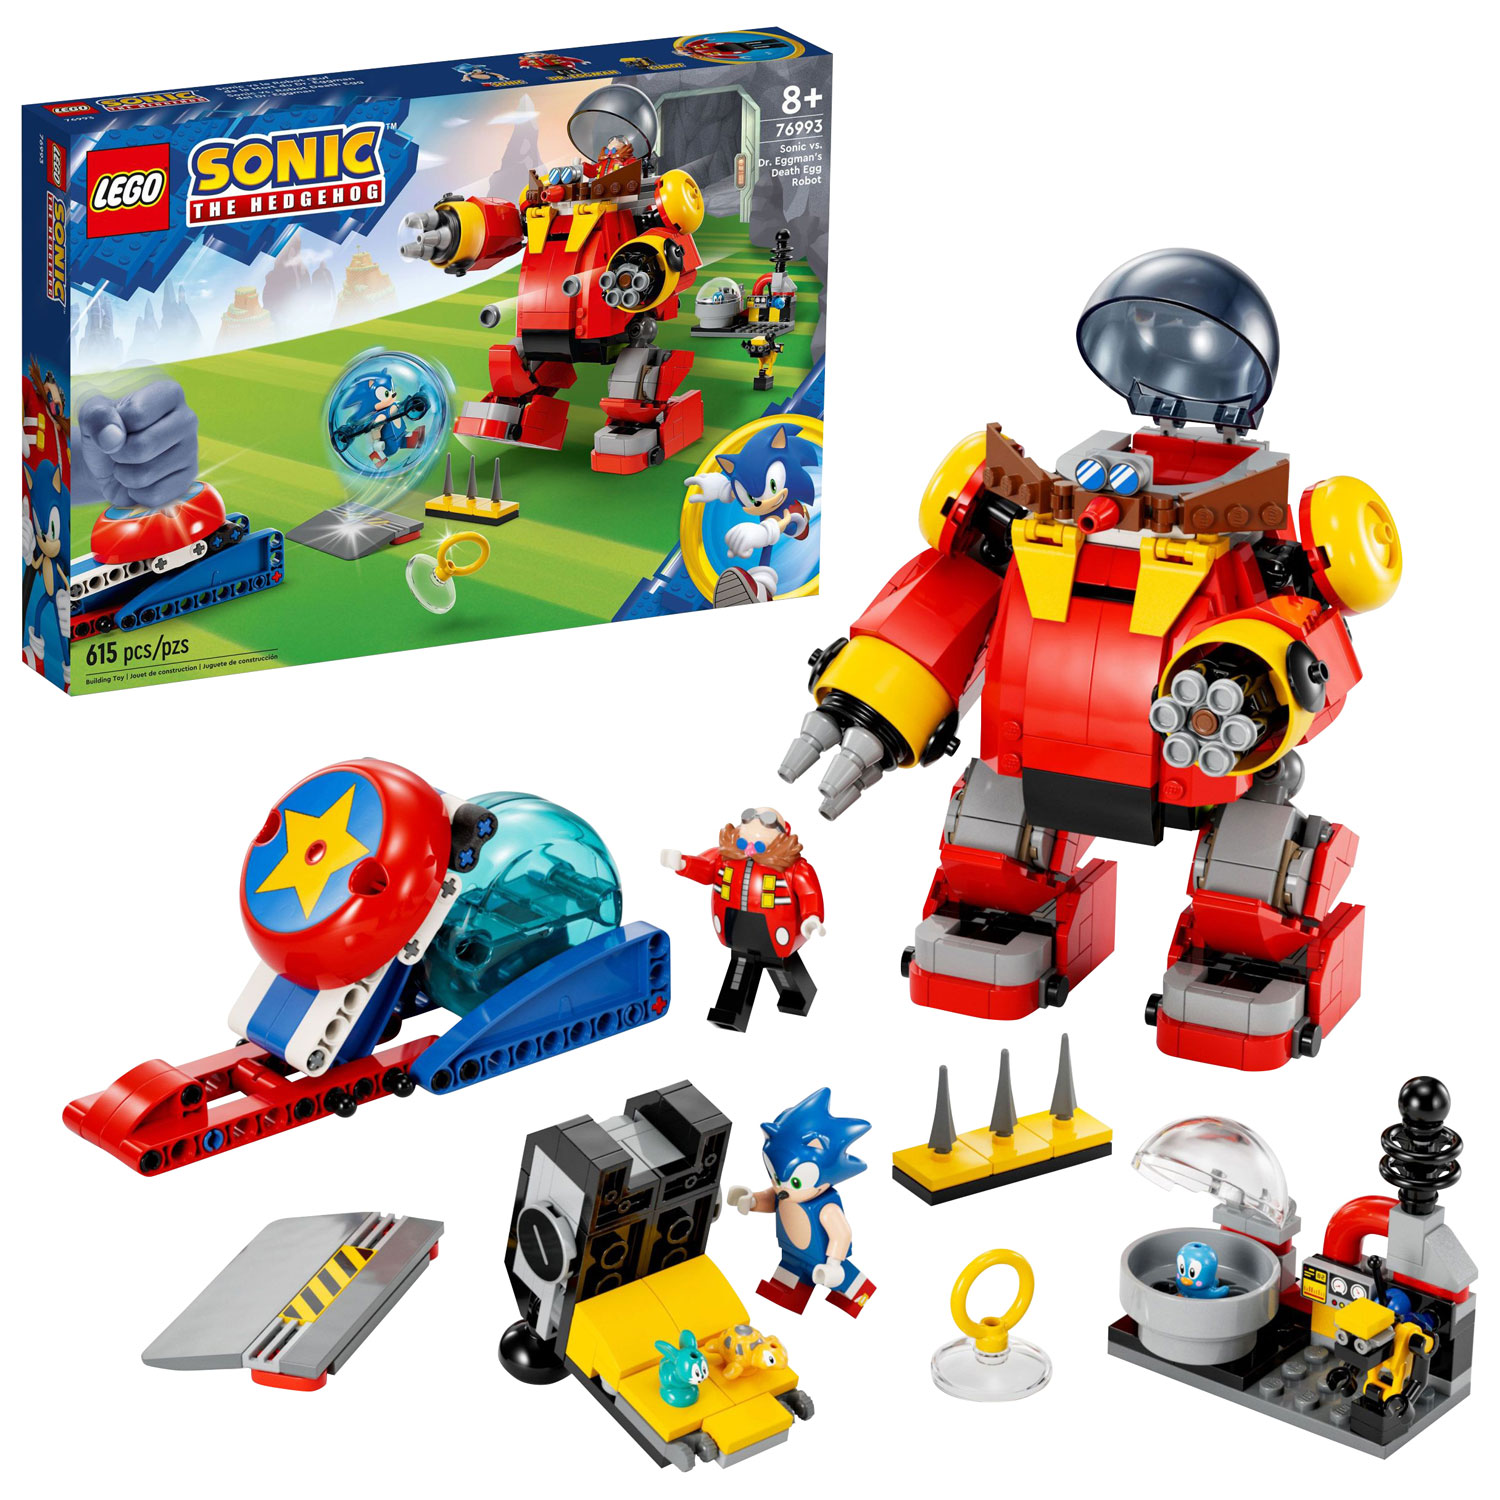 LEGO Sonic the Hedgehog: Sonic vs. Dr. Eggman’s Death Egg Robot - 615 Pieces (76993)